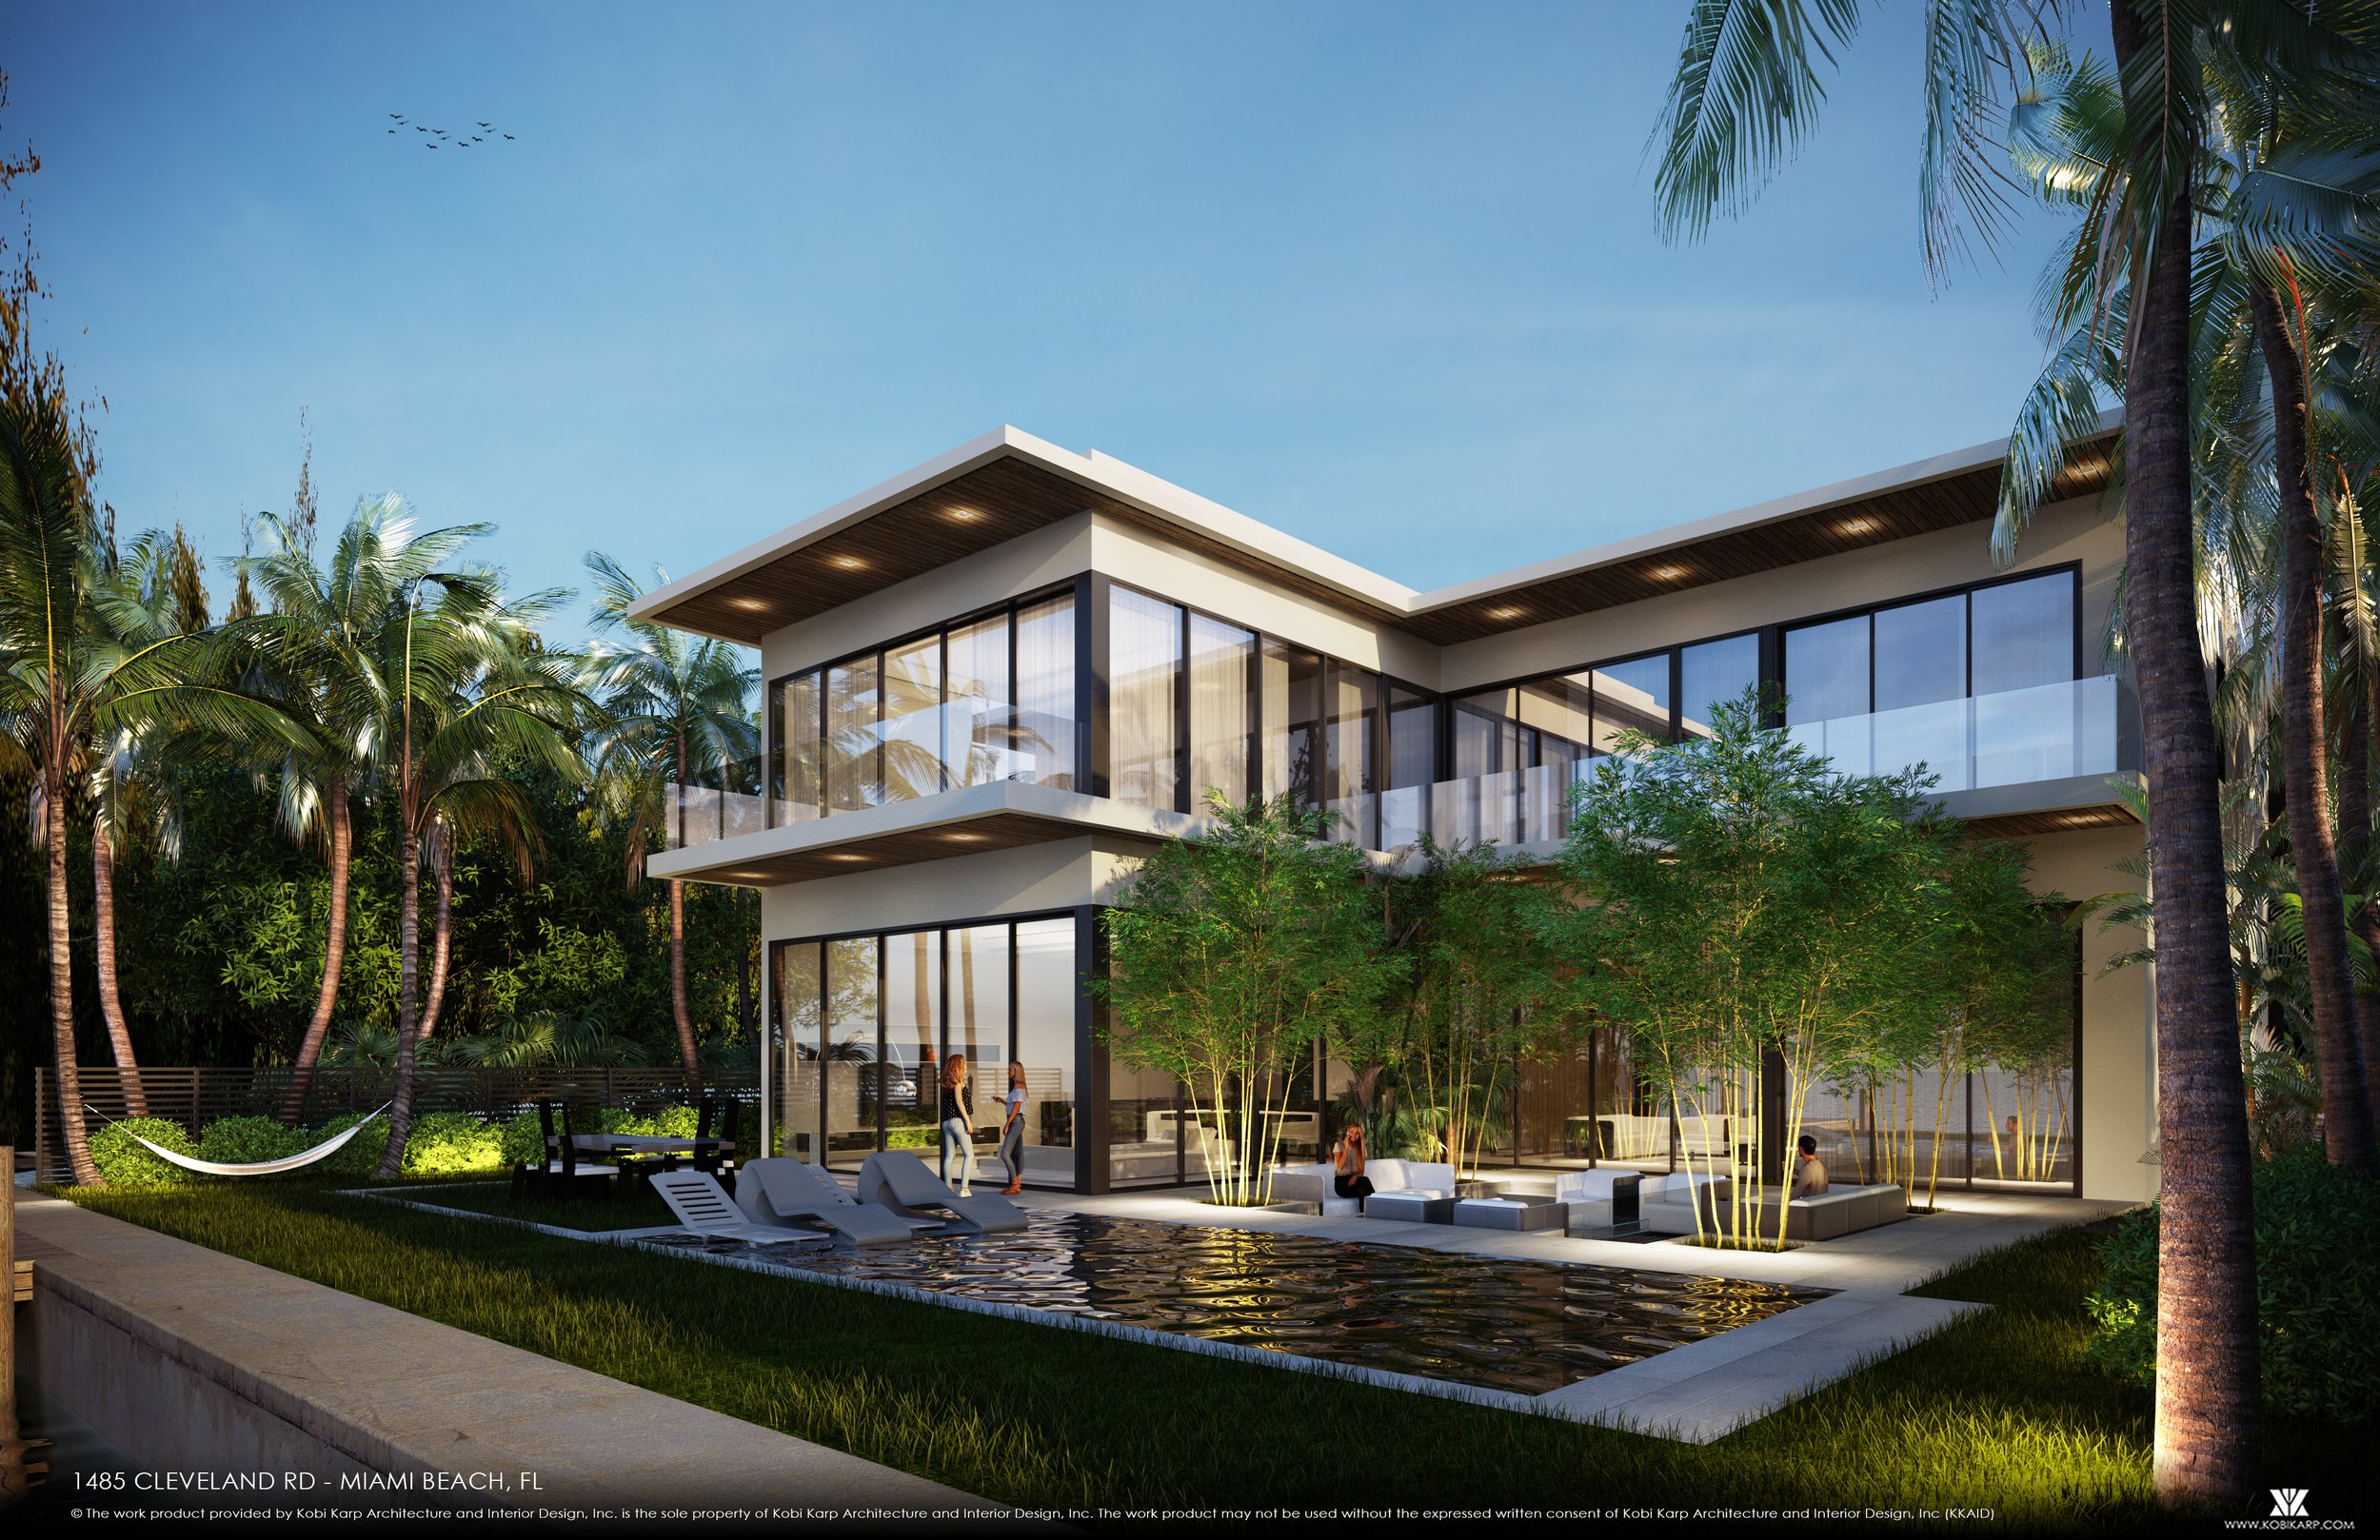 %22Siesta Key%22 MTV Star Sam Logan Buys Miami Beach Waterfront Mansion For $13 Million 3.jpg